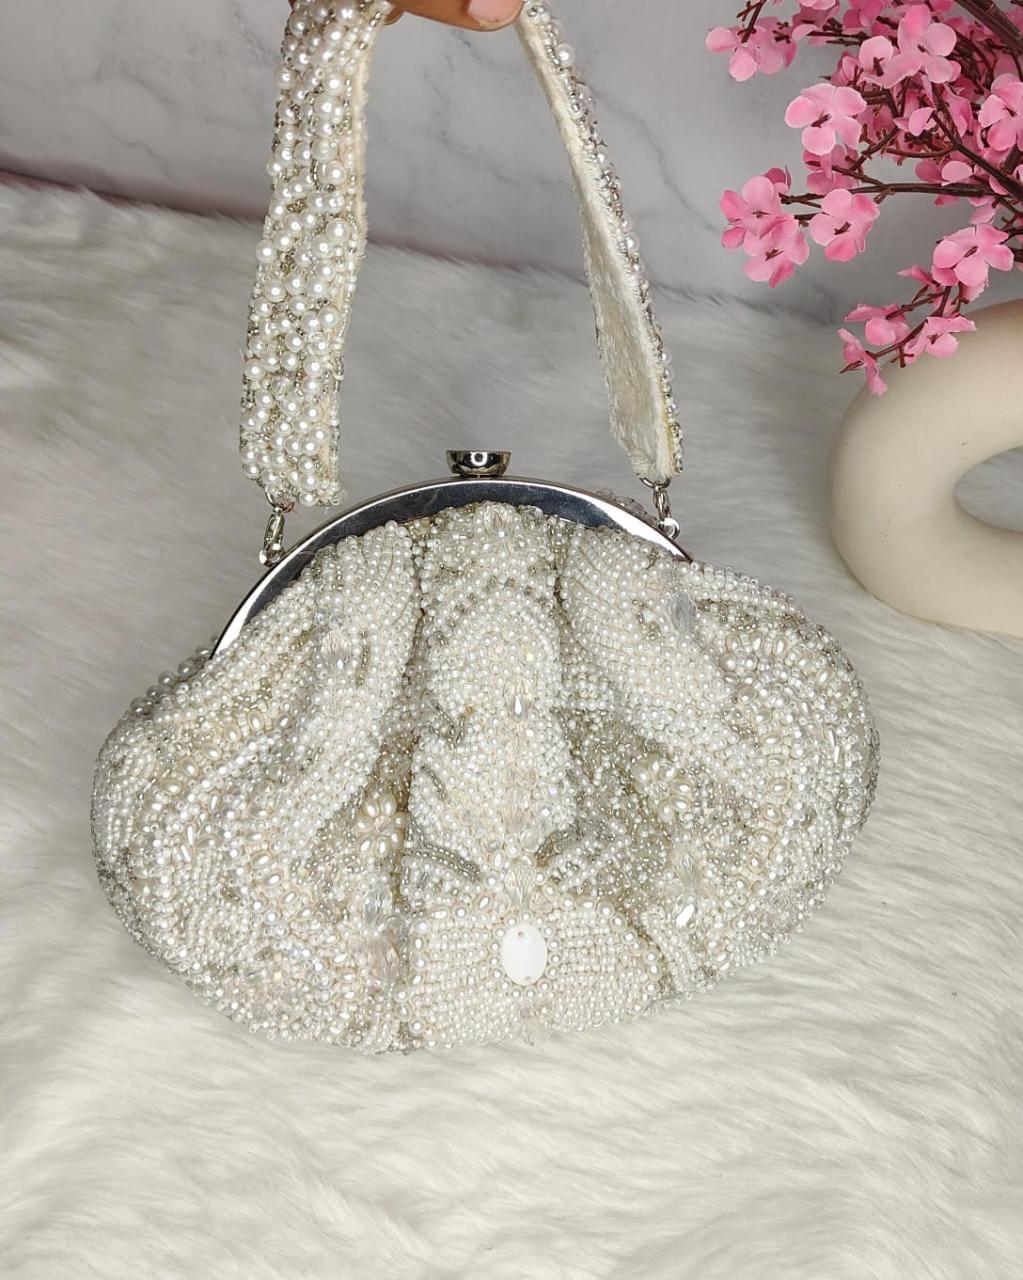 Buy Branded Ladies Handbags Online in Pakistan - Zamani.pk